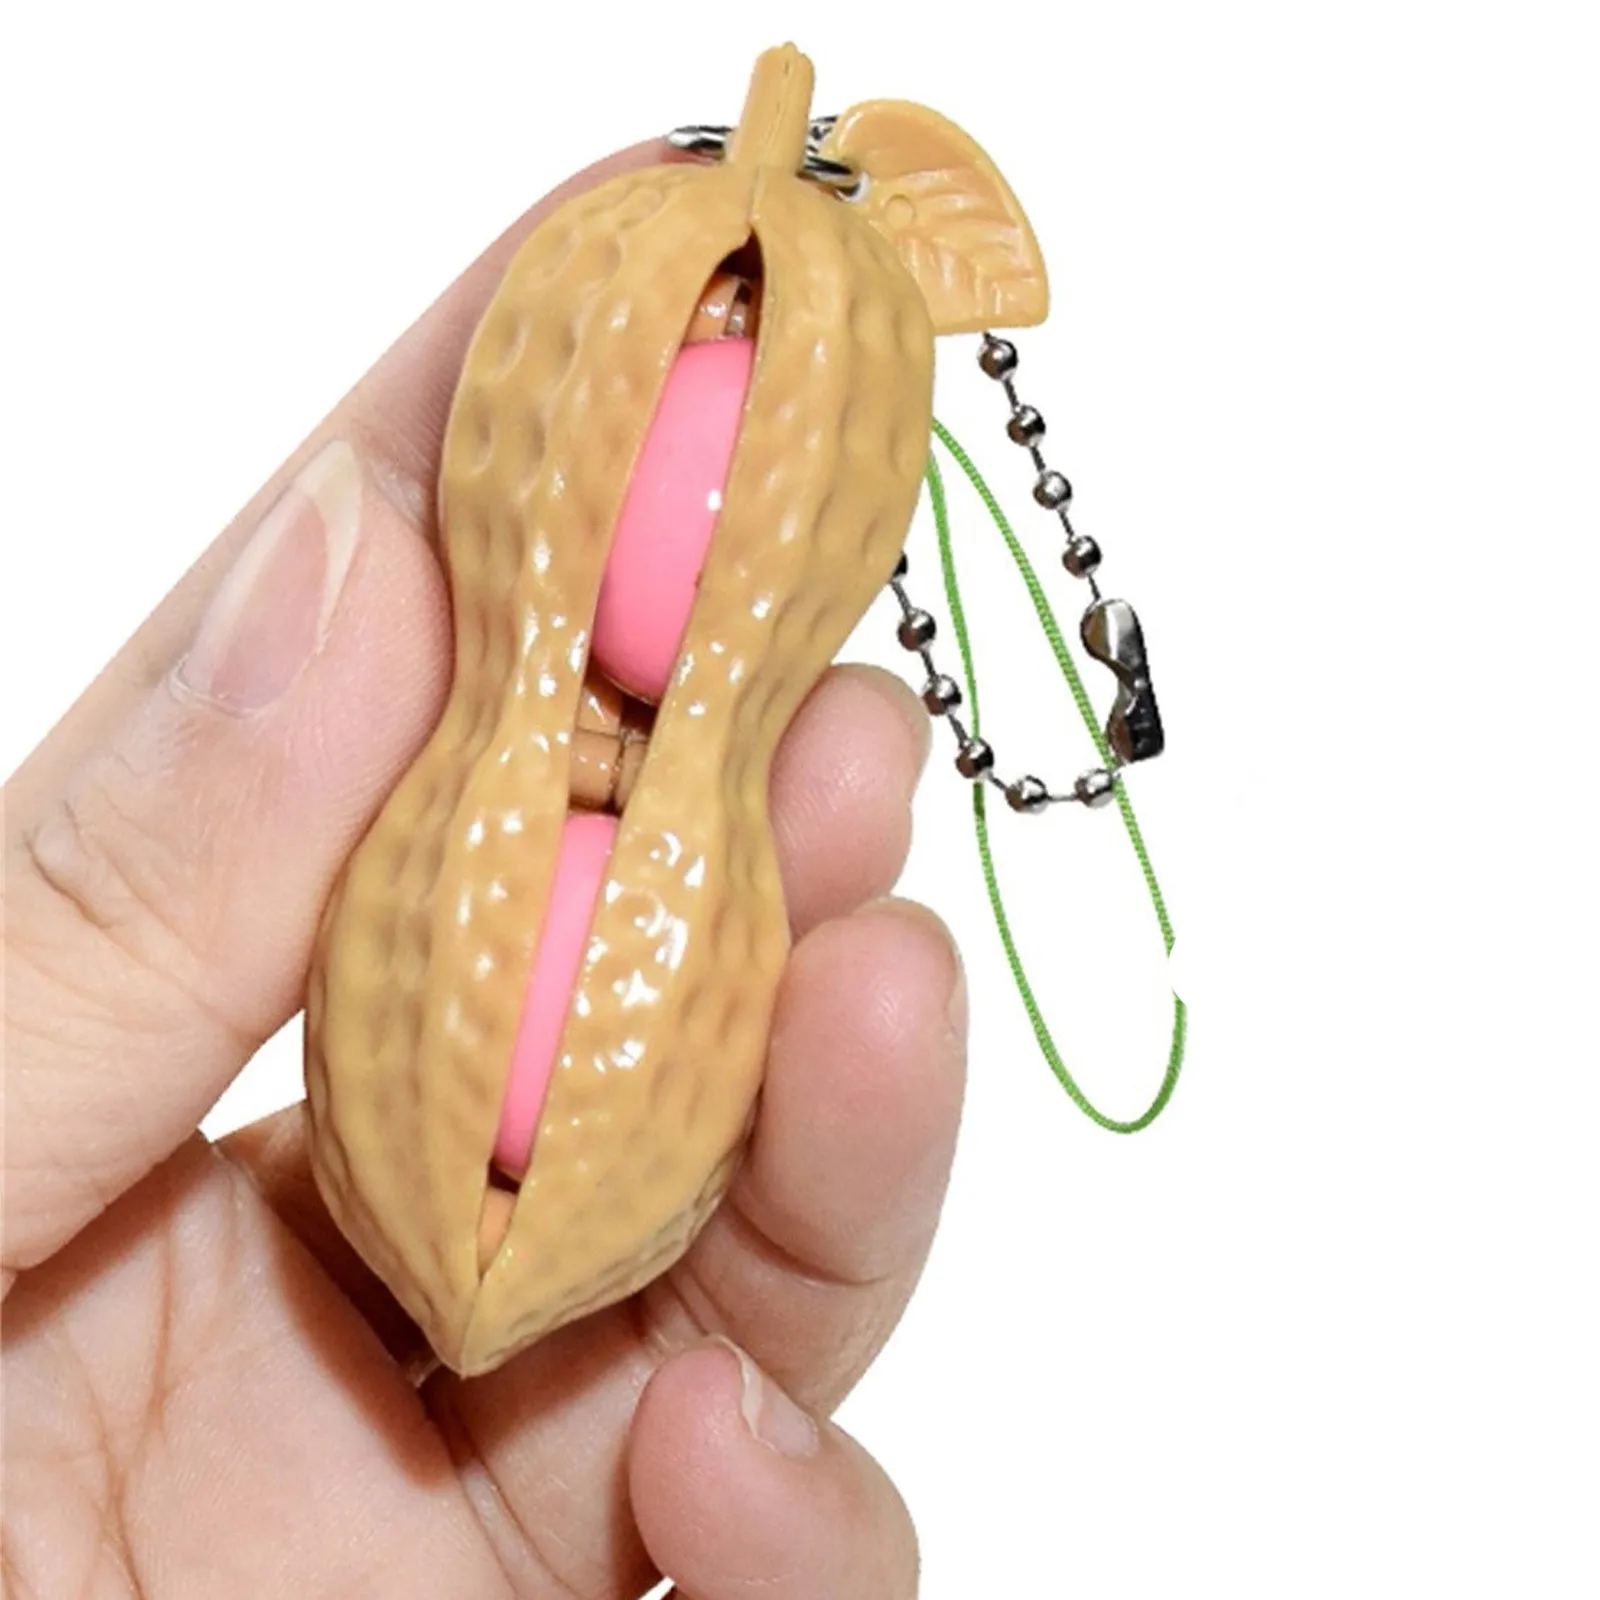 

Kawaii Fidget Toy Stress Relief Fidget Toys Keychain Improve Focus Officer Toy Sensory Squeeze Squishy Antistress Rebound Pinch